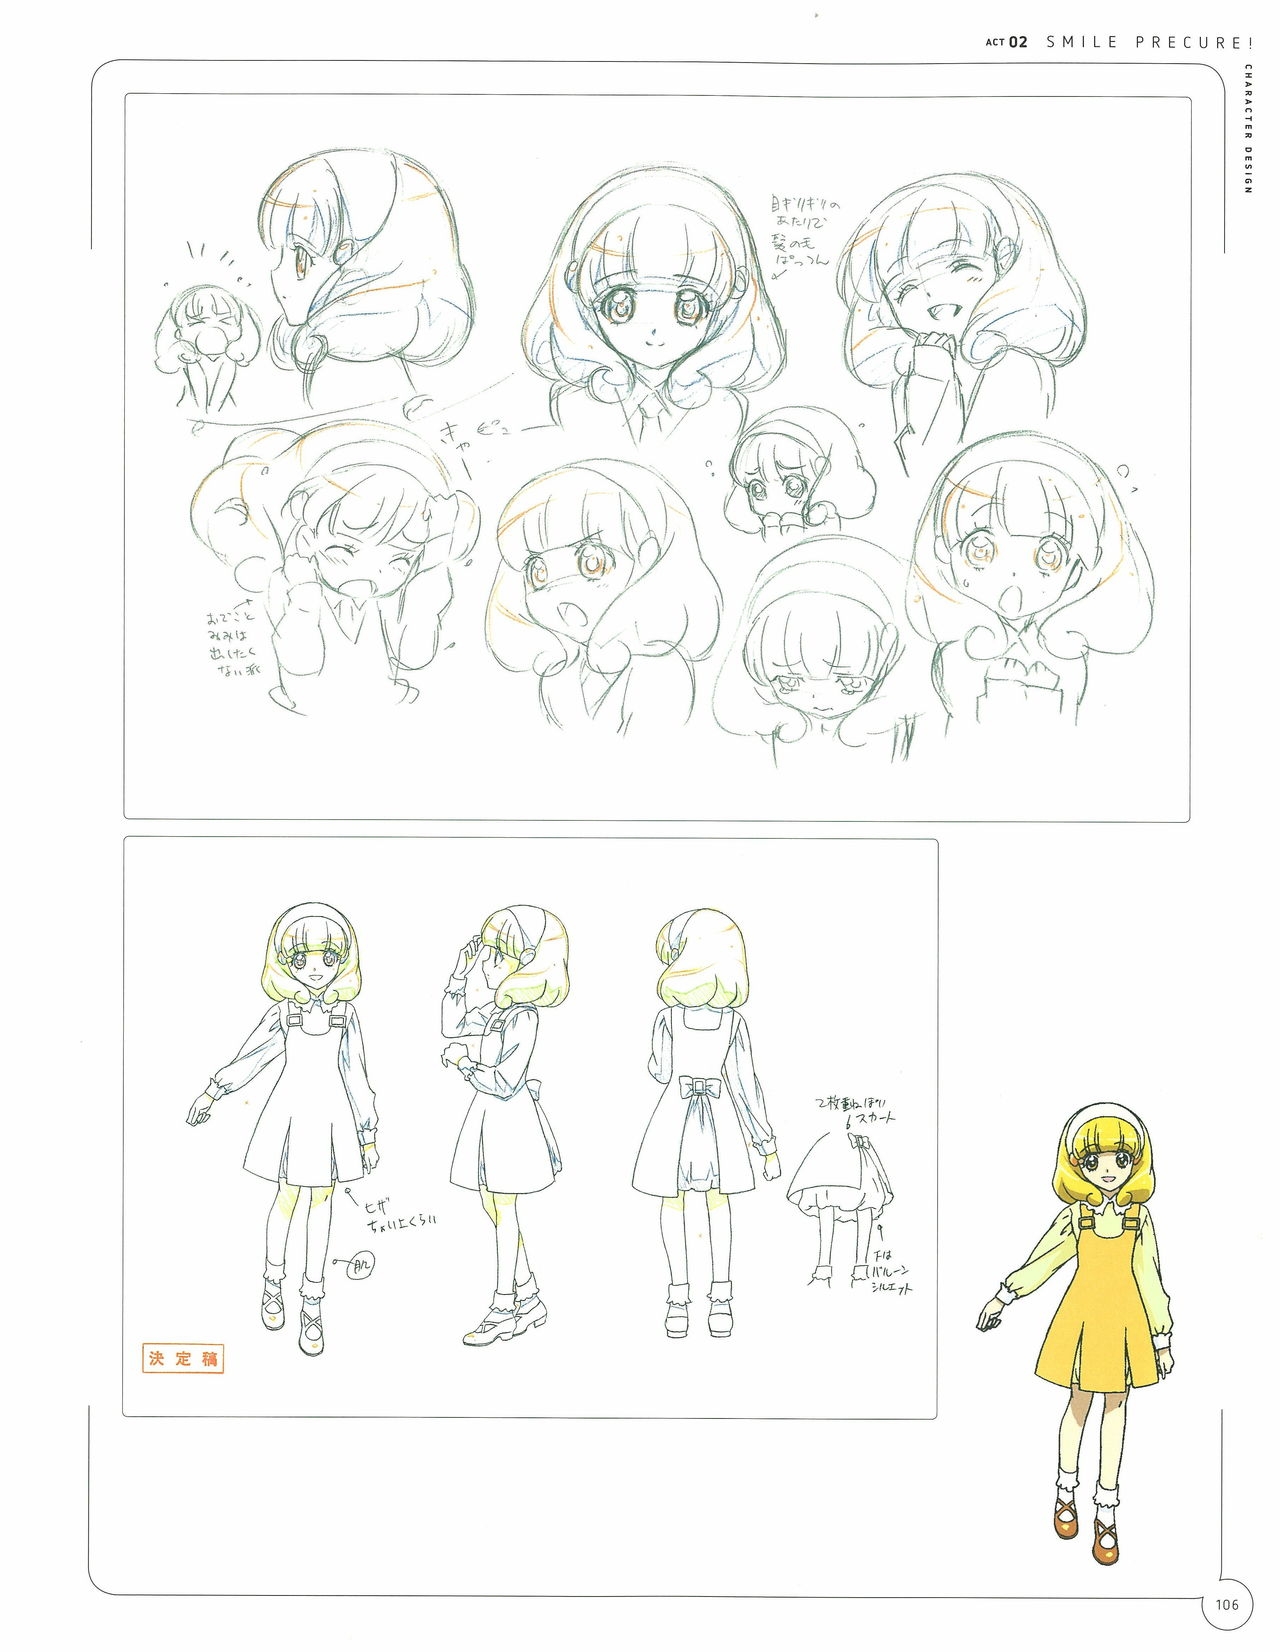 Kawamura Toshie - Toei Animation Precure Works 106